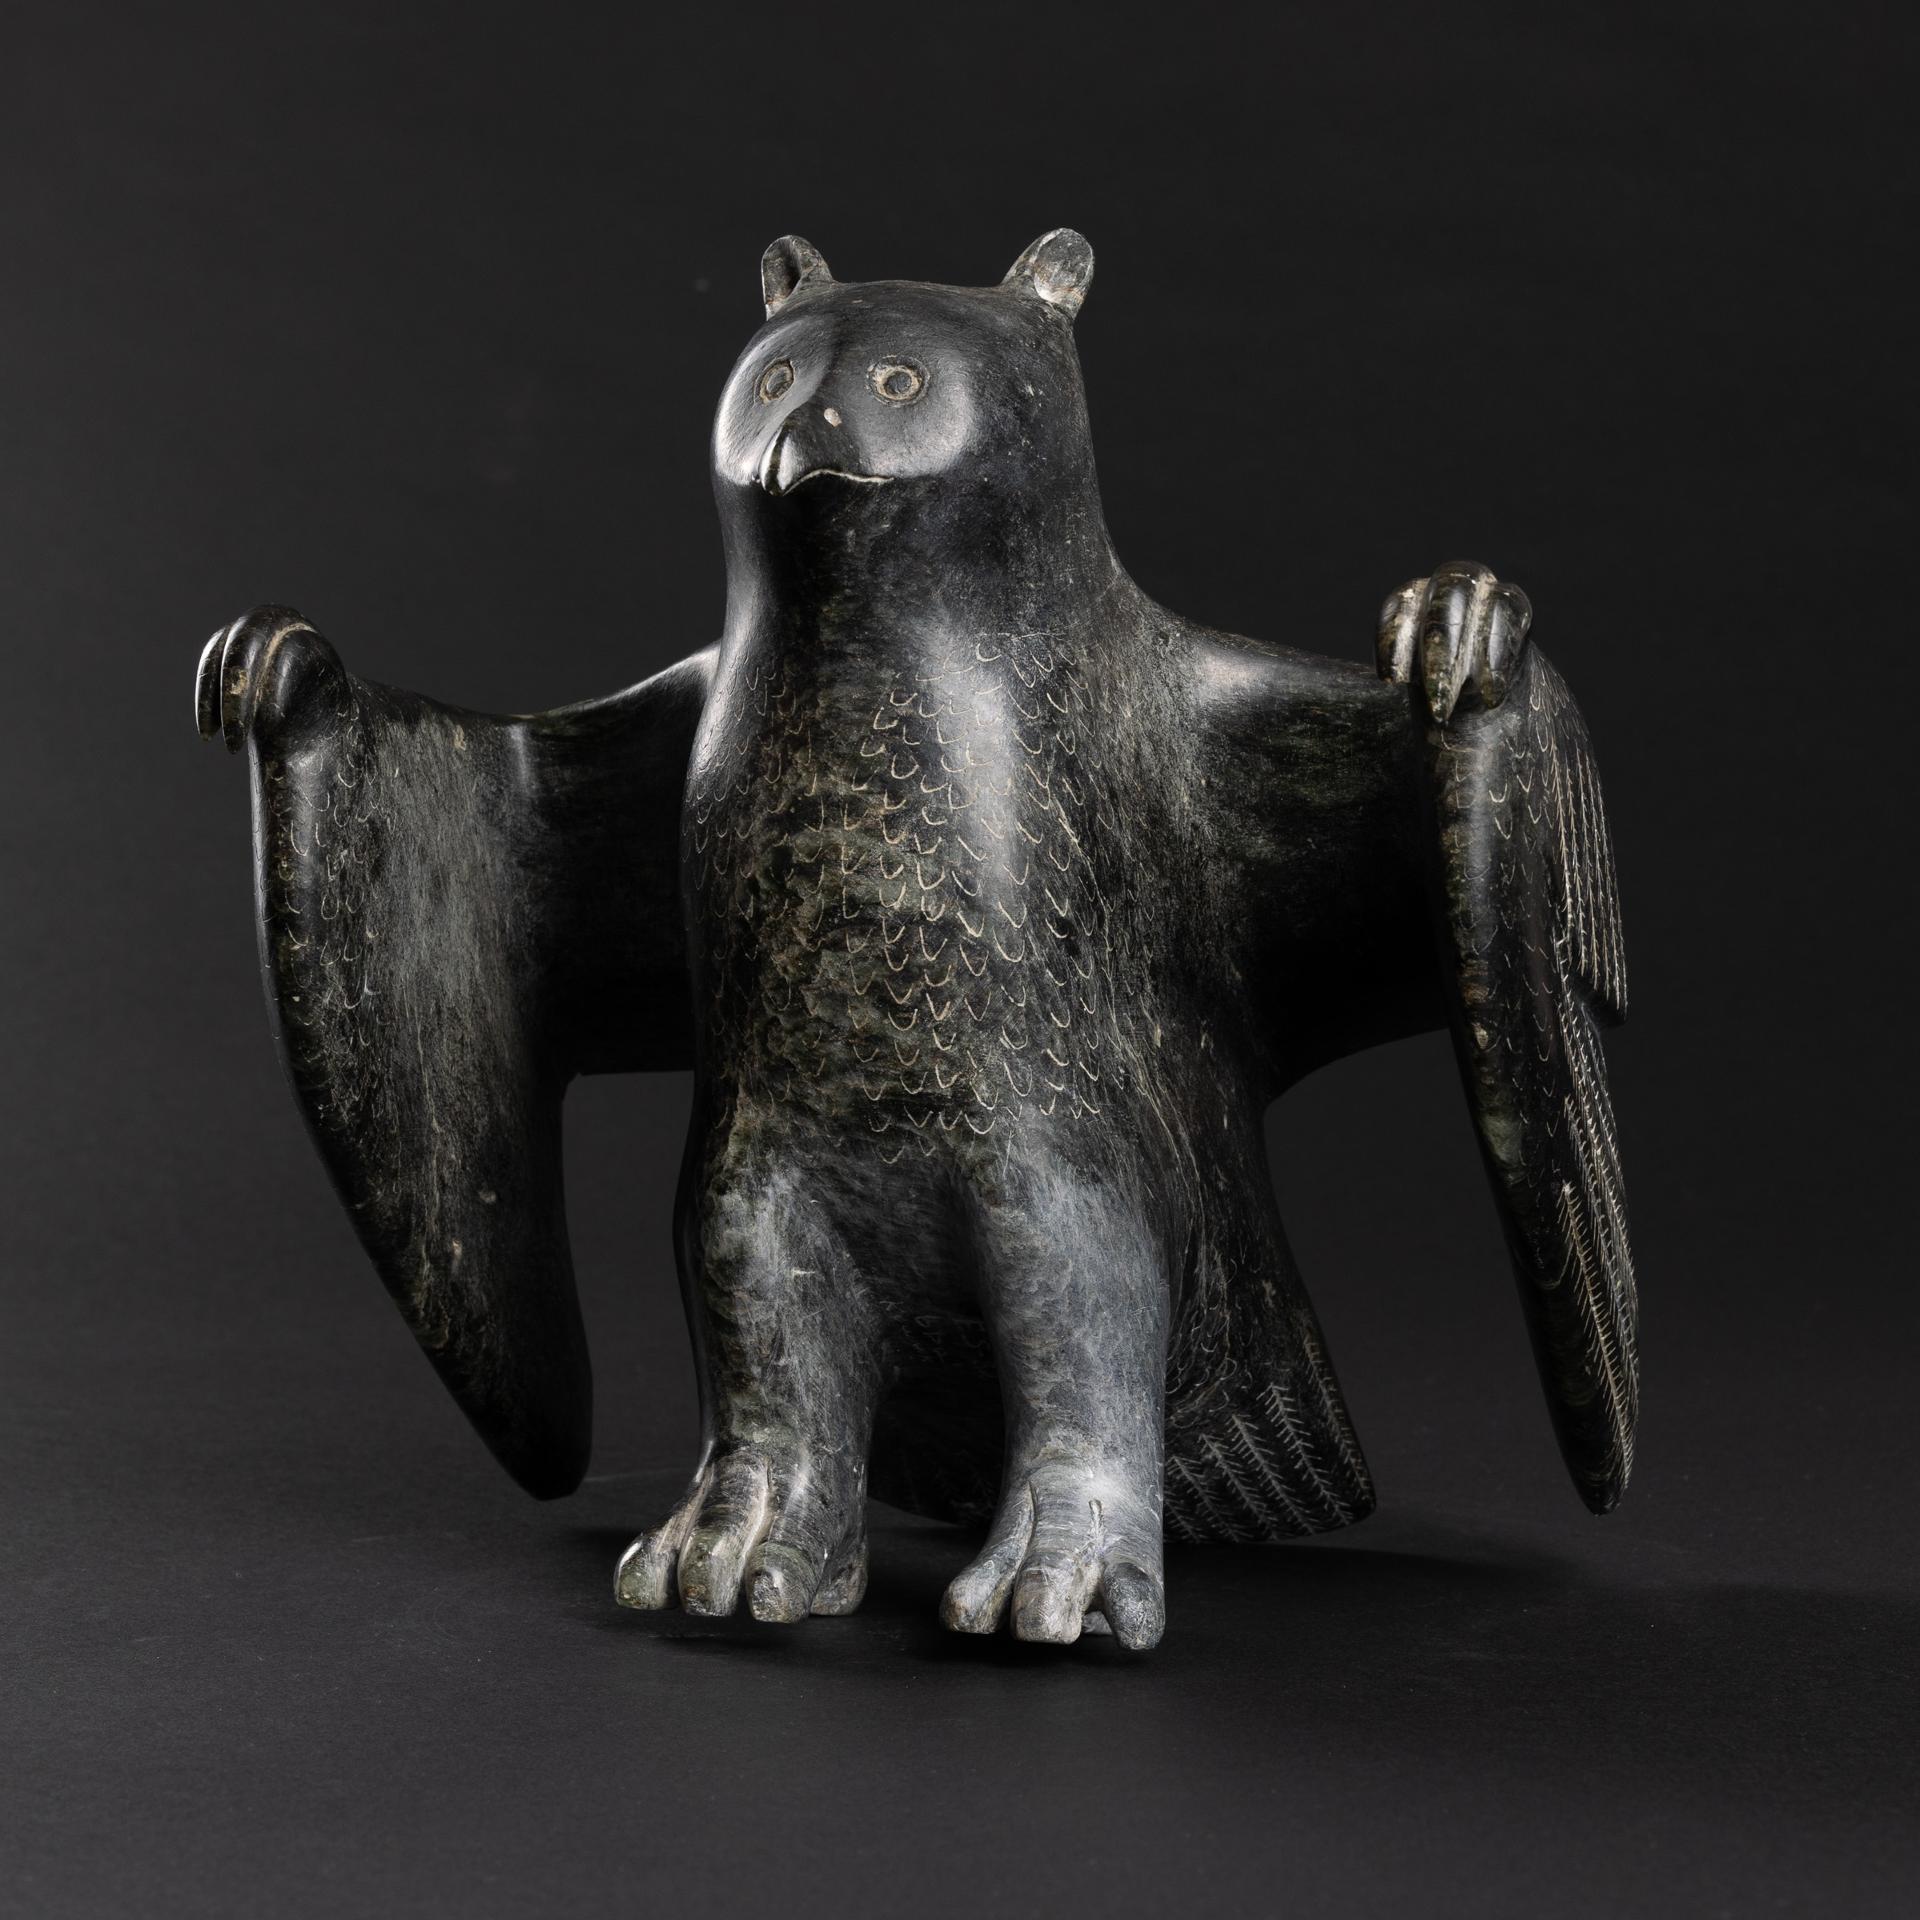 Sakiassee Qaunaq (1942) - Owl